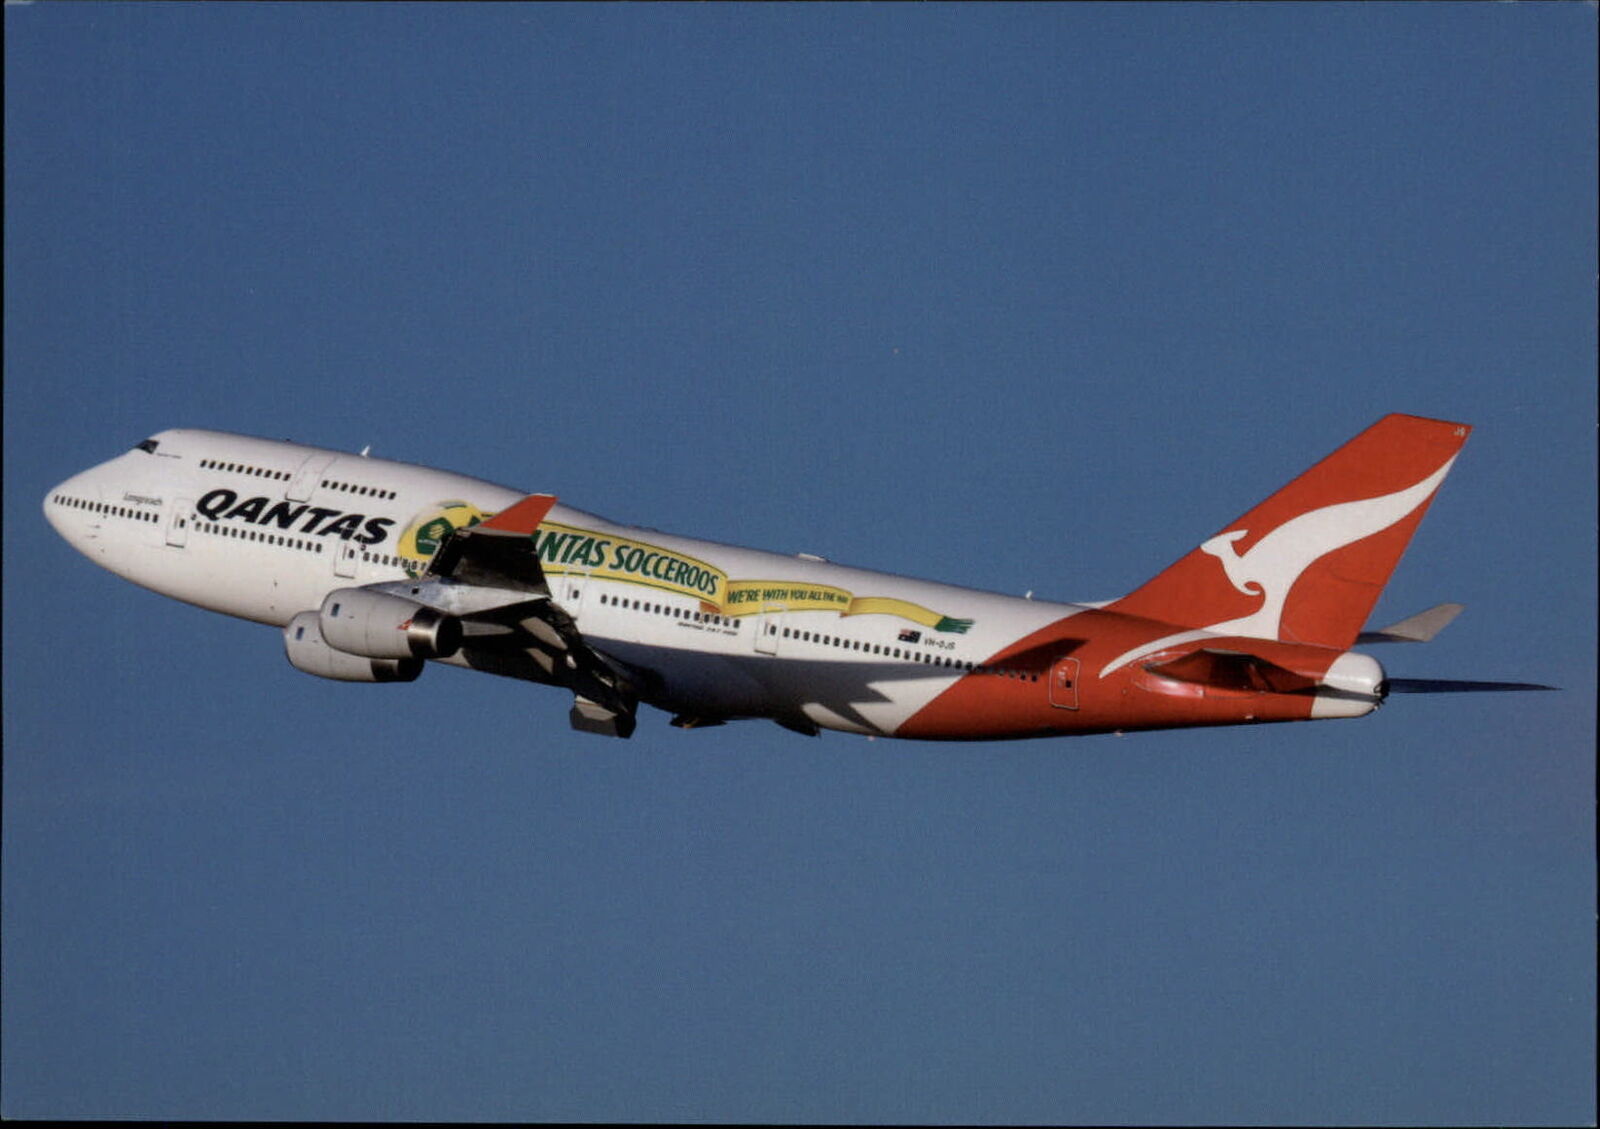 Sydney Australia Qantas Airlines Socceroos football soccer team banner postcard